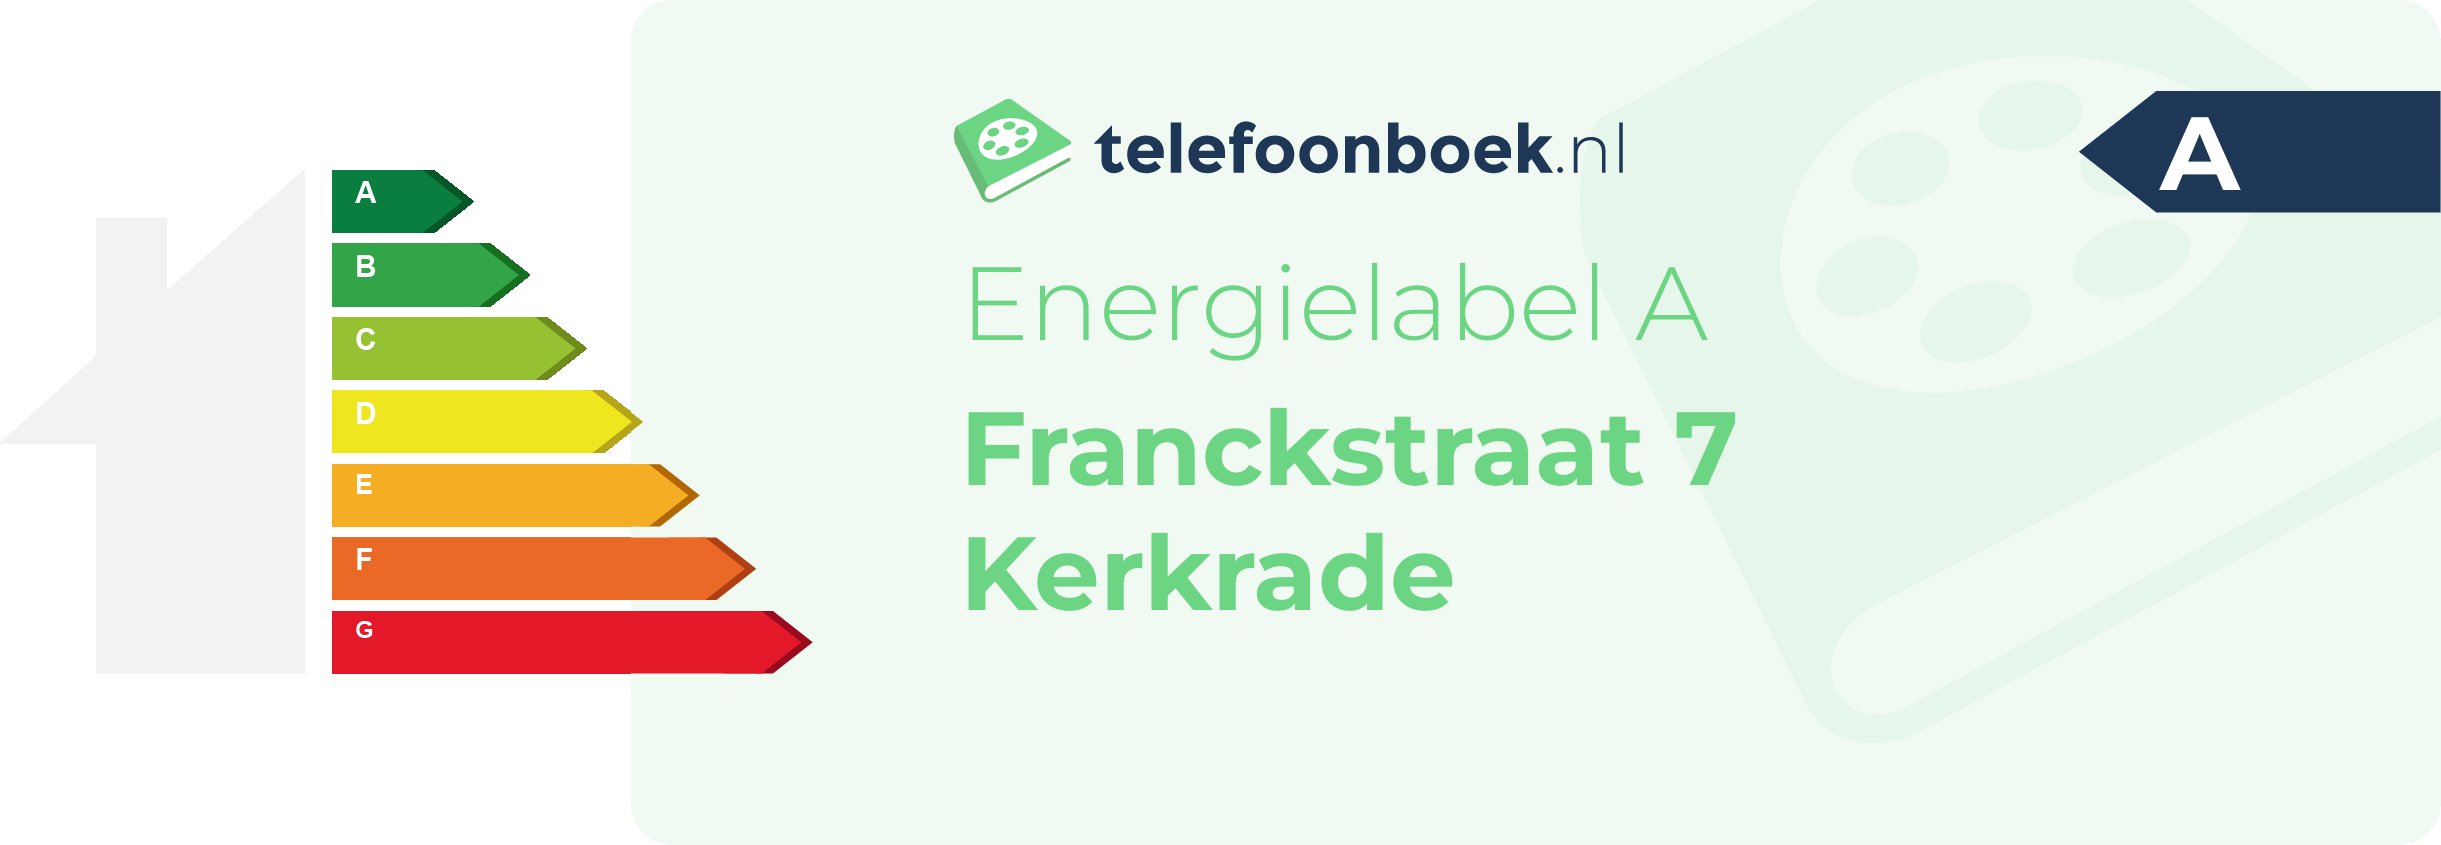 Energielabel Franckstraat 7 Kerkrade